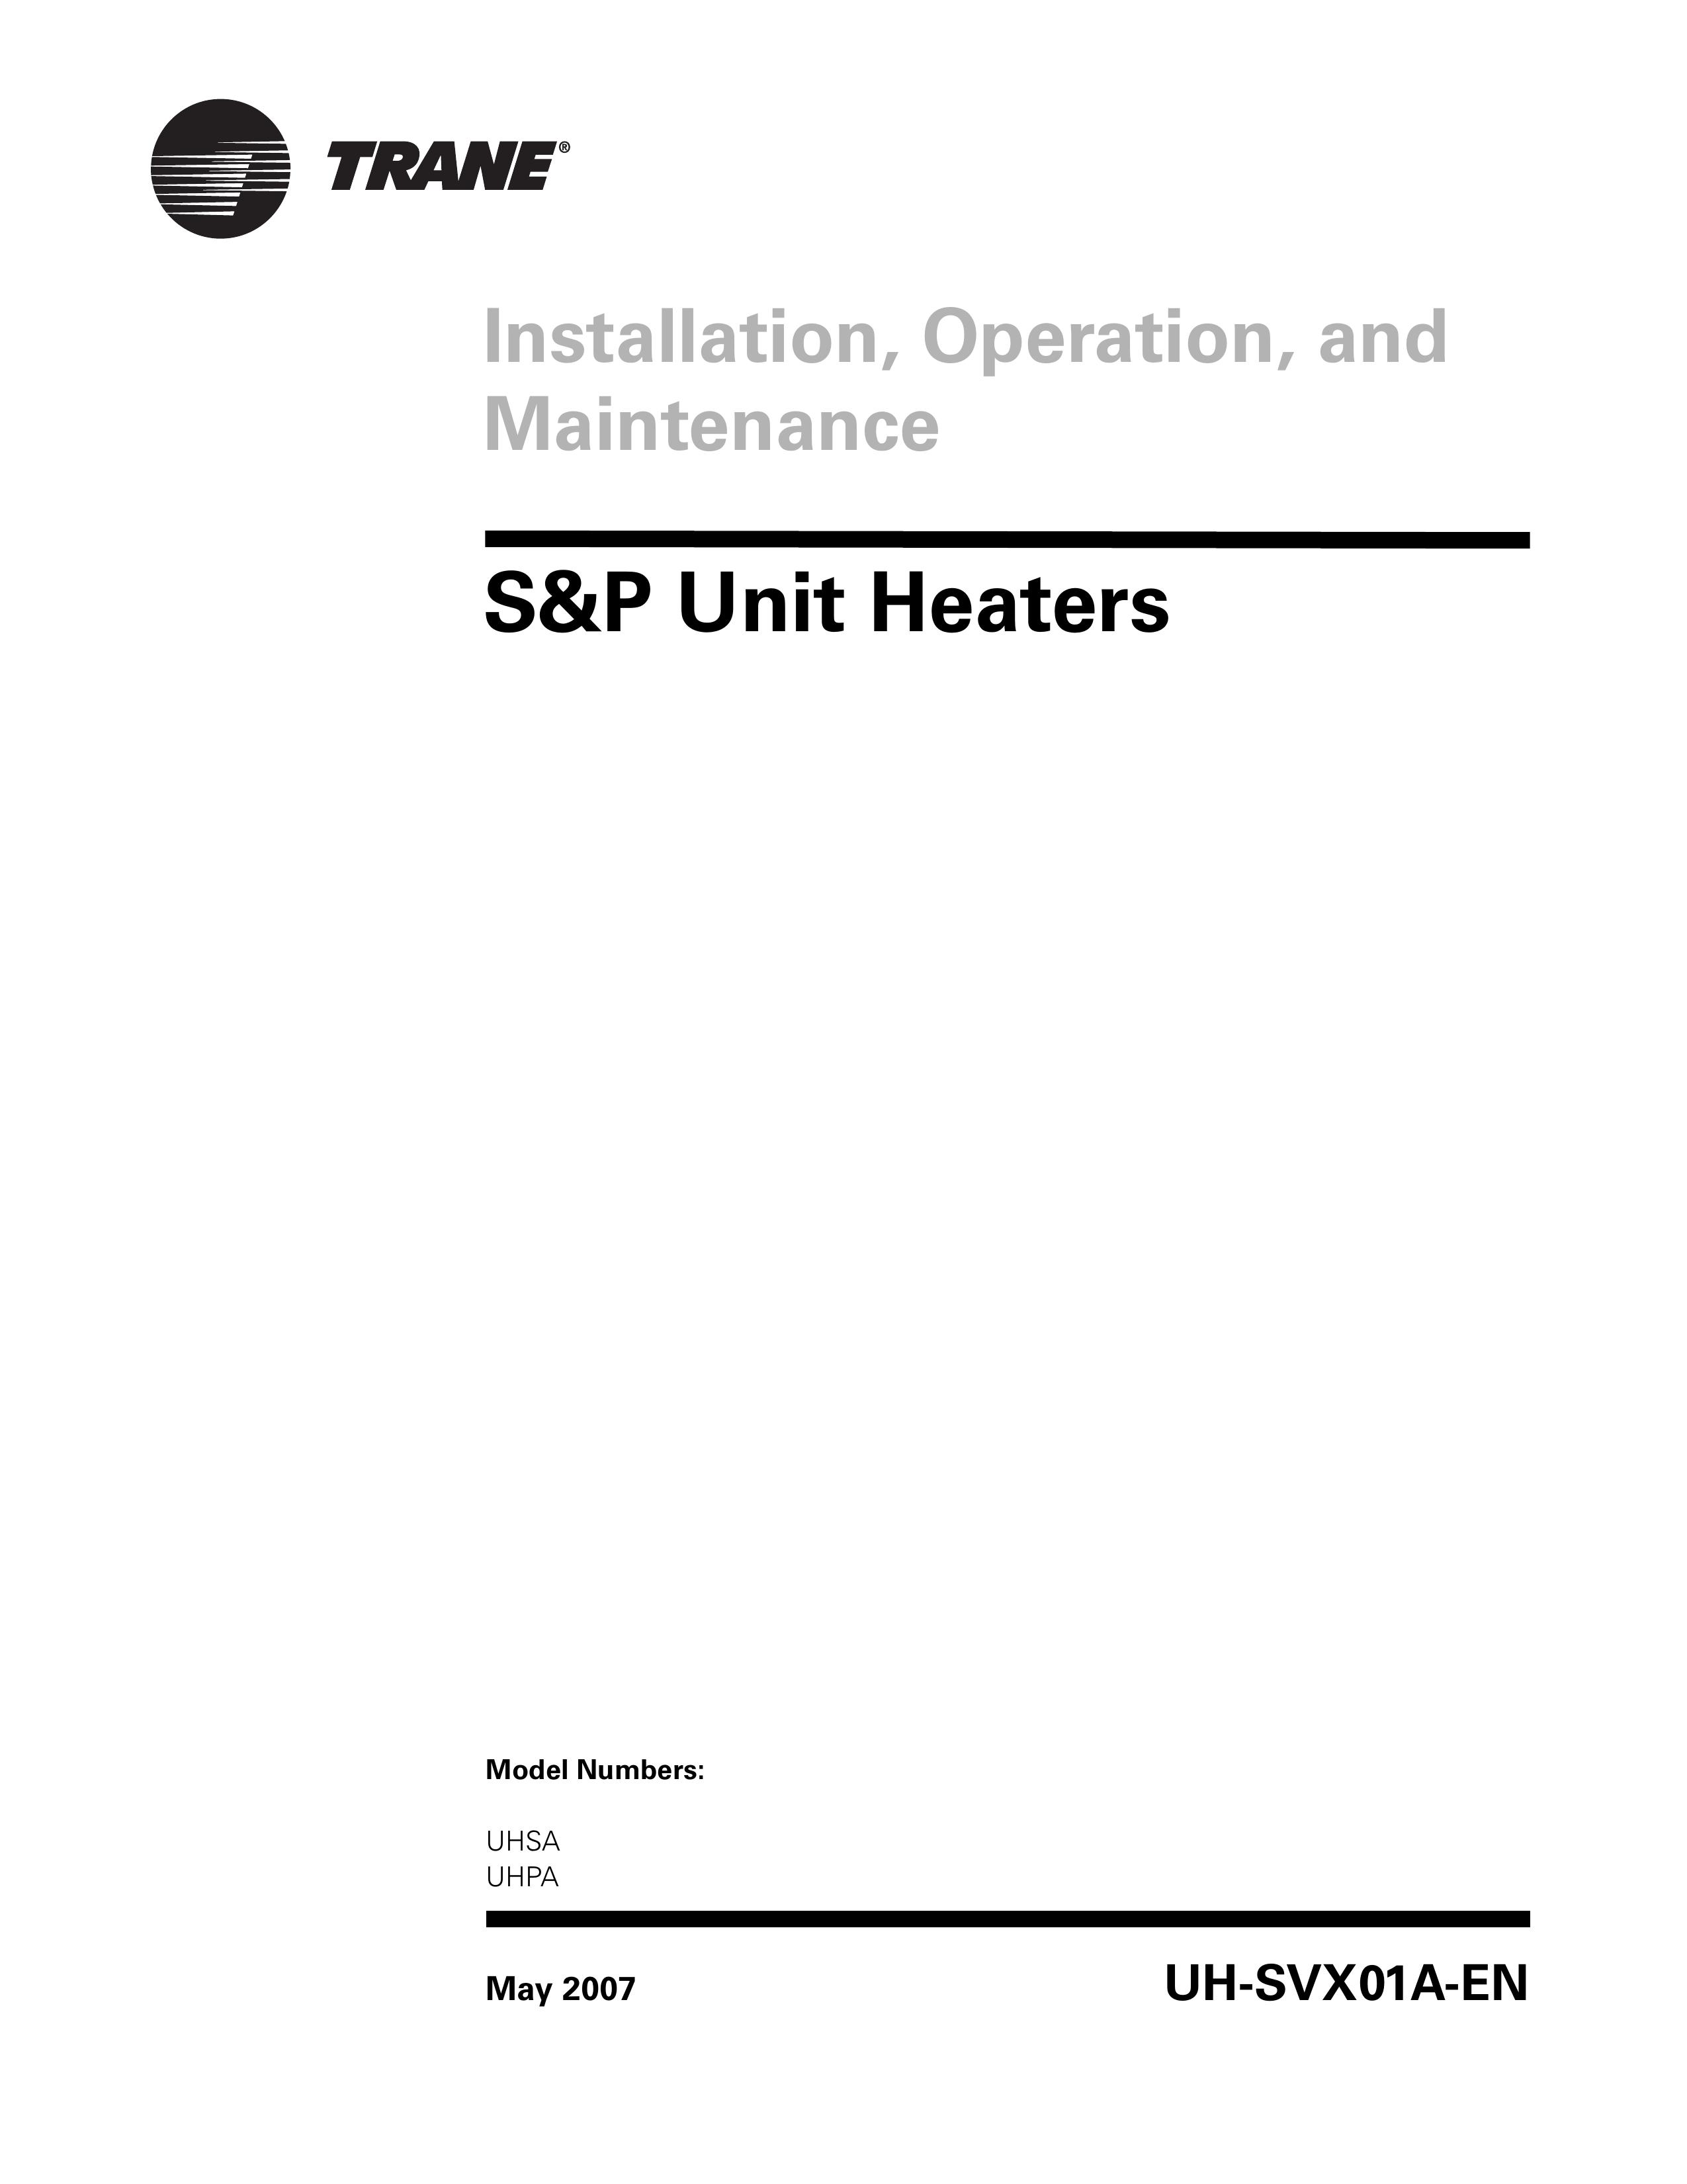 Trane UH-SVX01A-EN Patio Heater User Manual